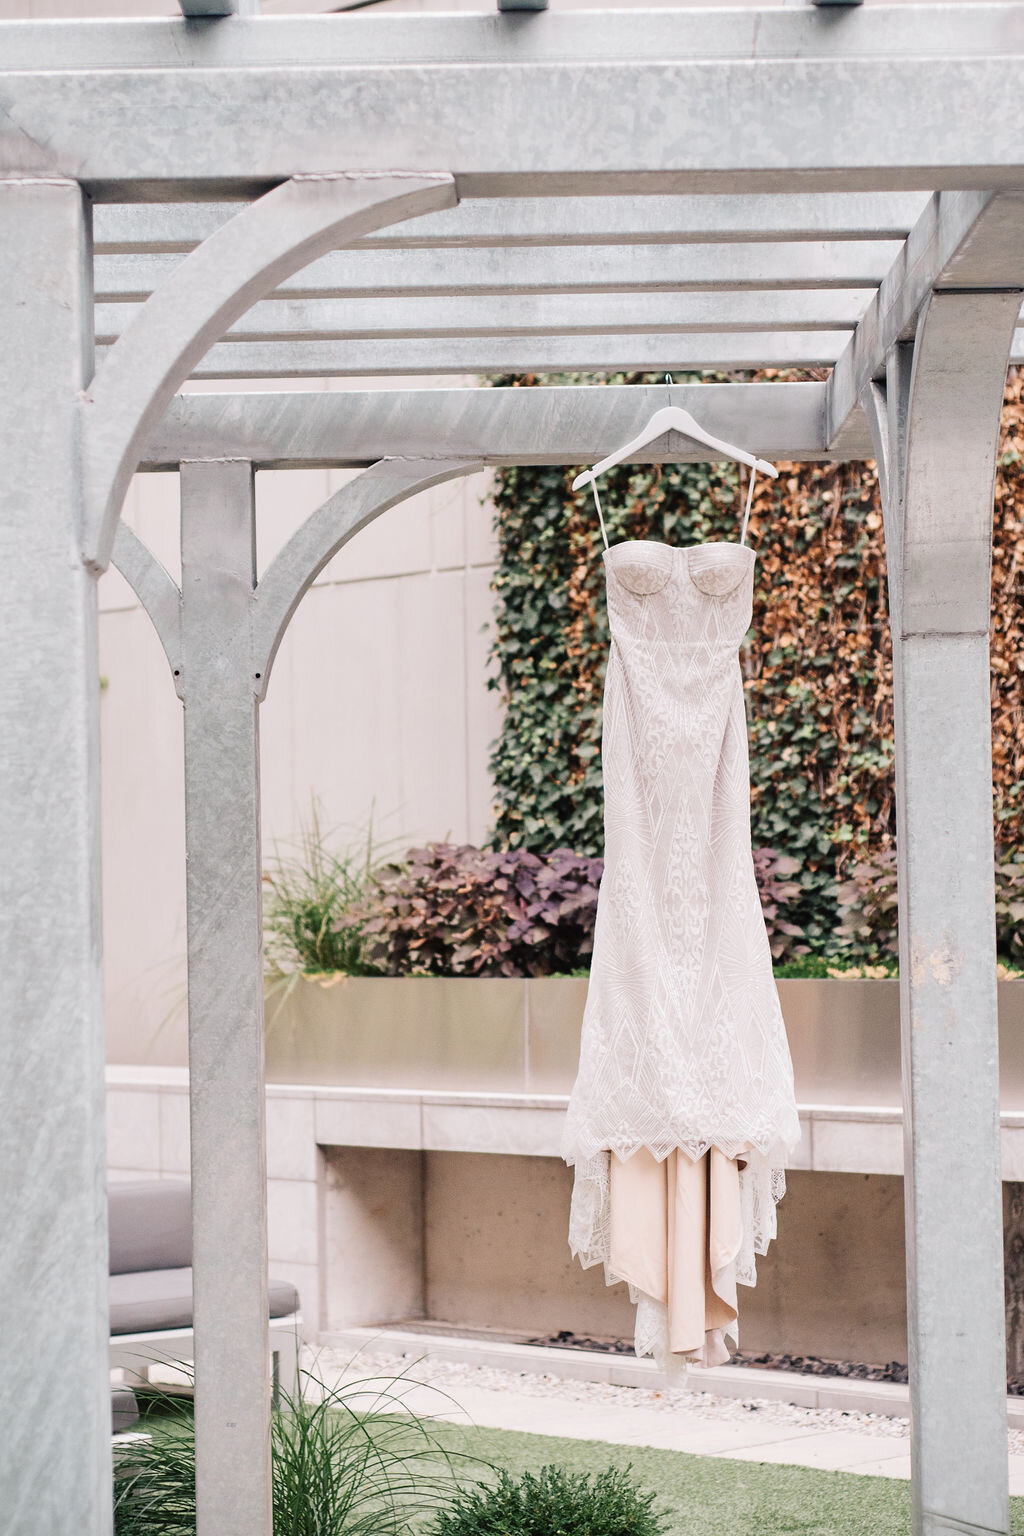 Photograph of Toronto Bride's wedding dress outside her residence